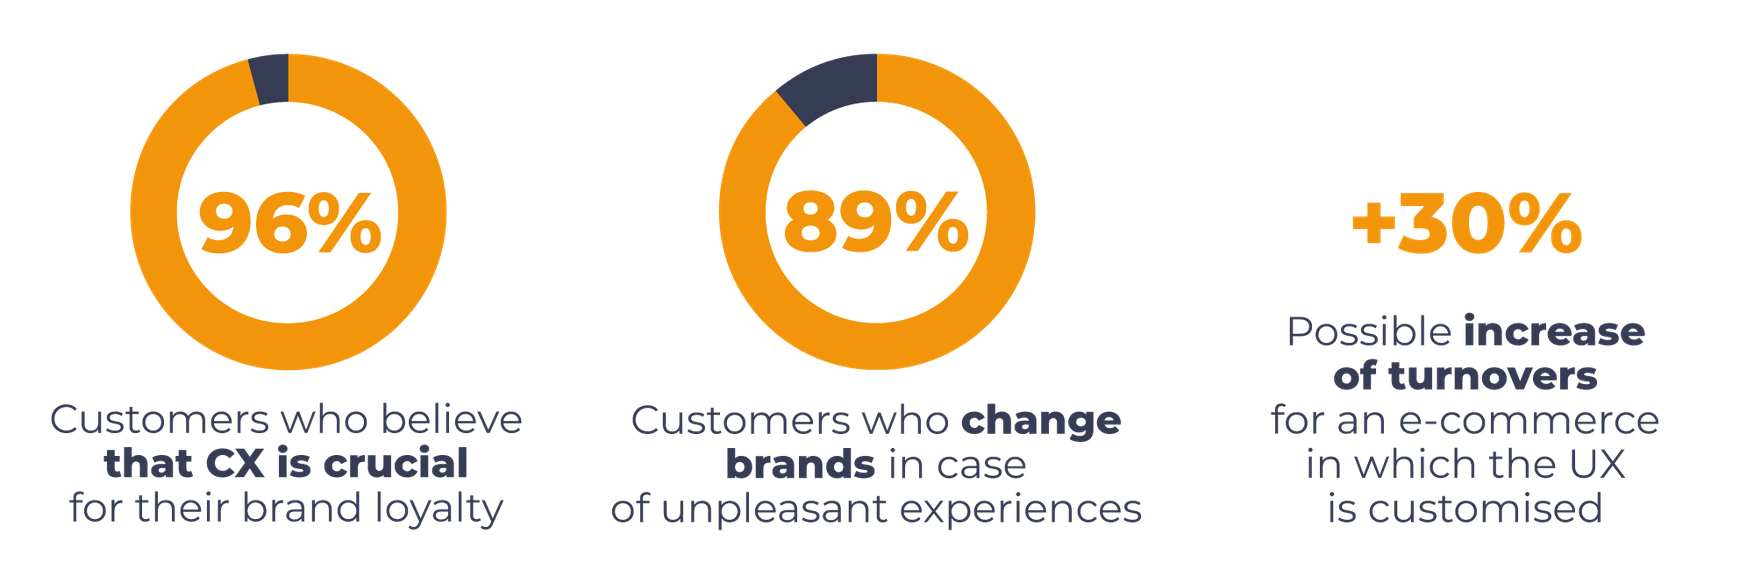 Customer experience data